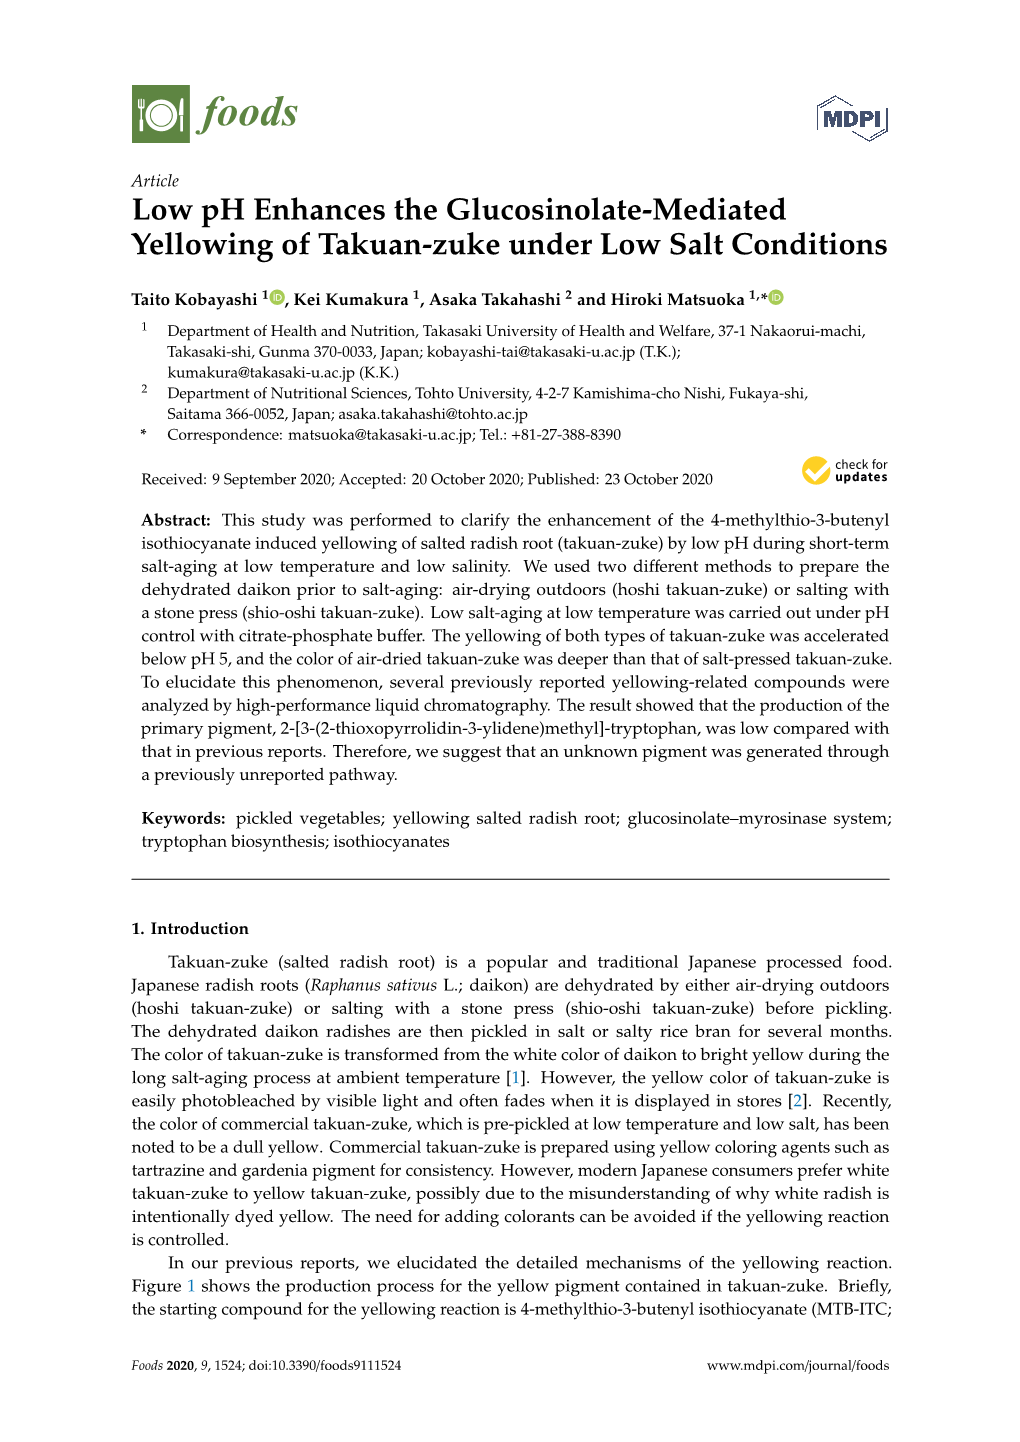 Low Ph Enhances the Glucosinolate-Mediated Yellowing of Takuan-Zuke Under Low Salt Conditions